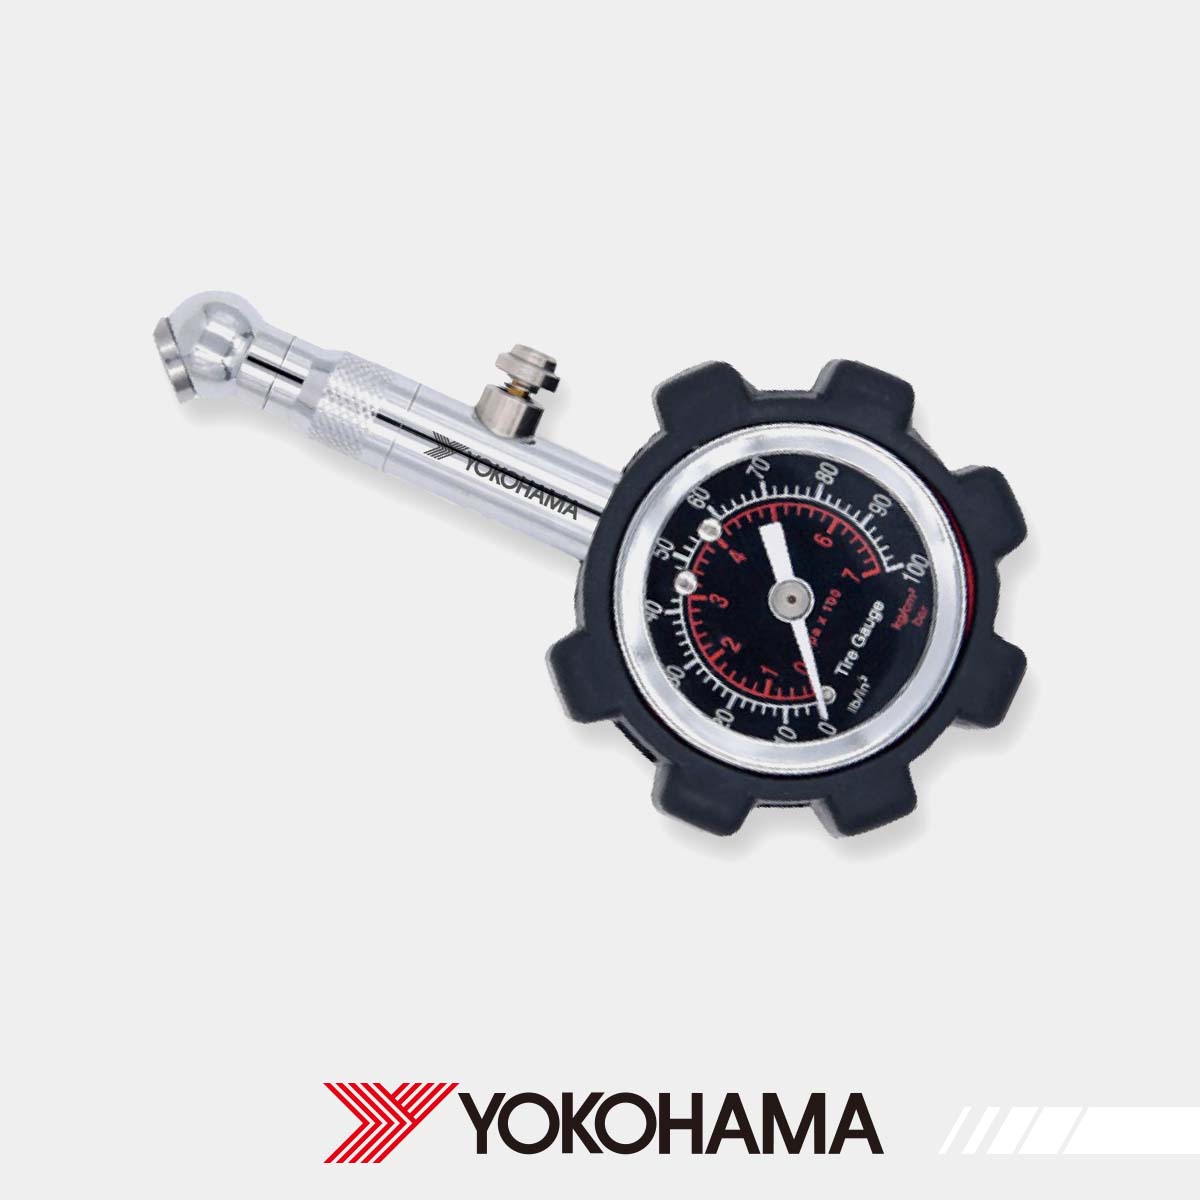 YOKOHAMA Tire Pressure Gauge